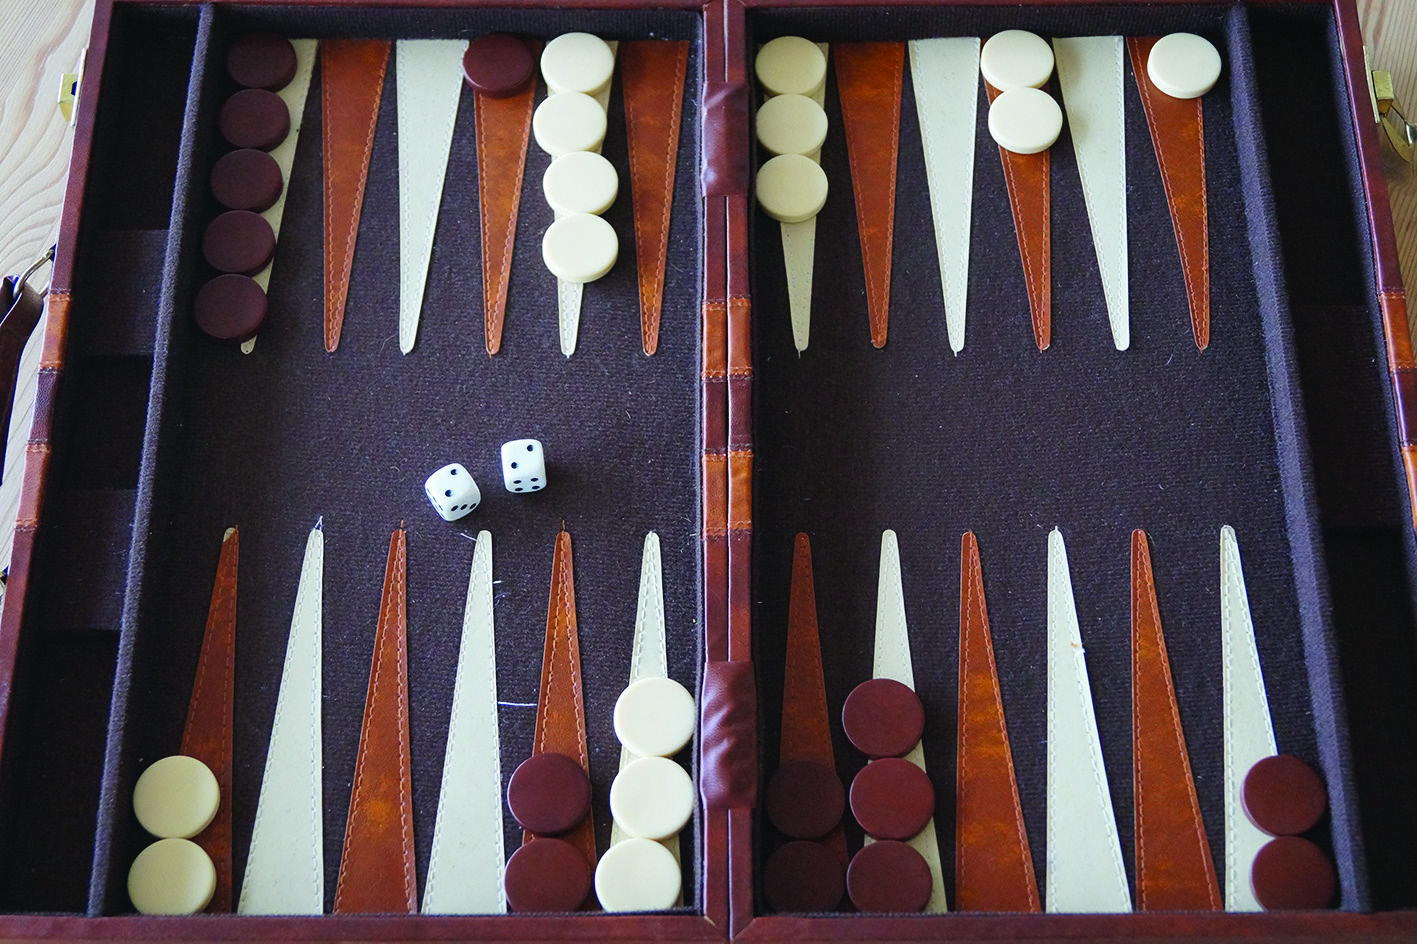 3 Backgammon Anna spiller backgammon i sin fritid. Backgammon er et brætspil, hvor to spillere på skift kaster to terninger. Terningkastene afgør, hvor mange felter spillerne må rykke deres brikker.